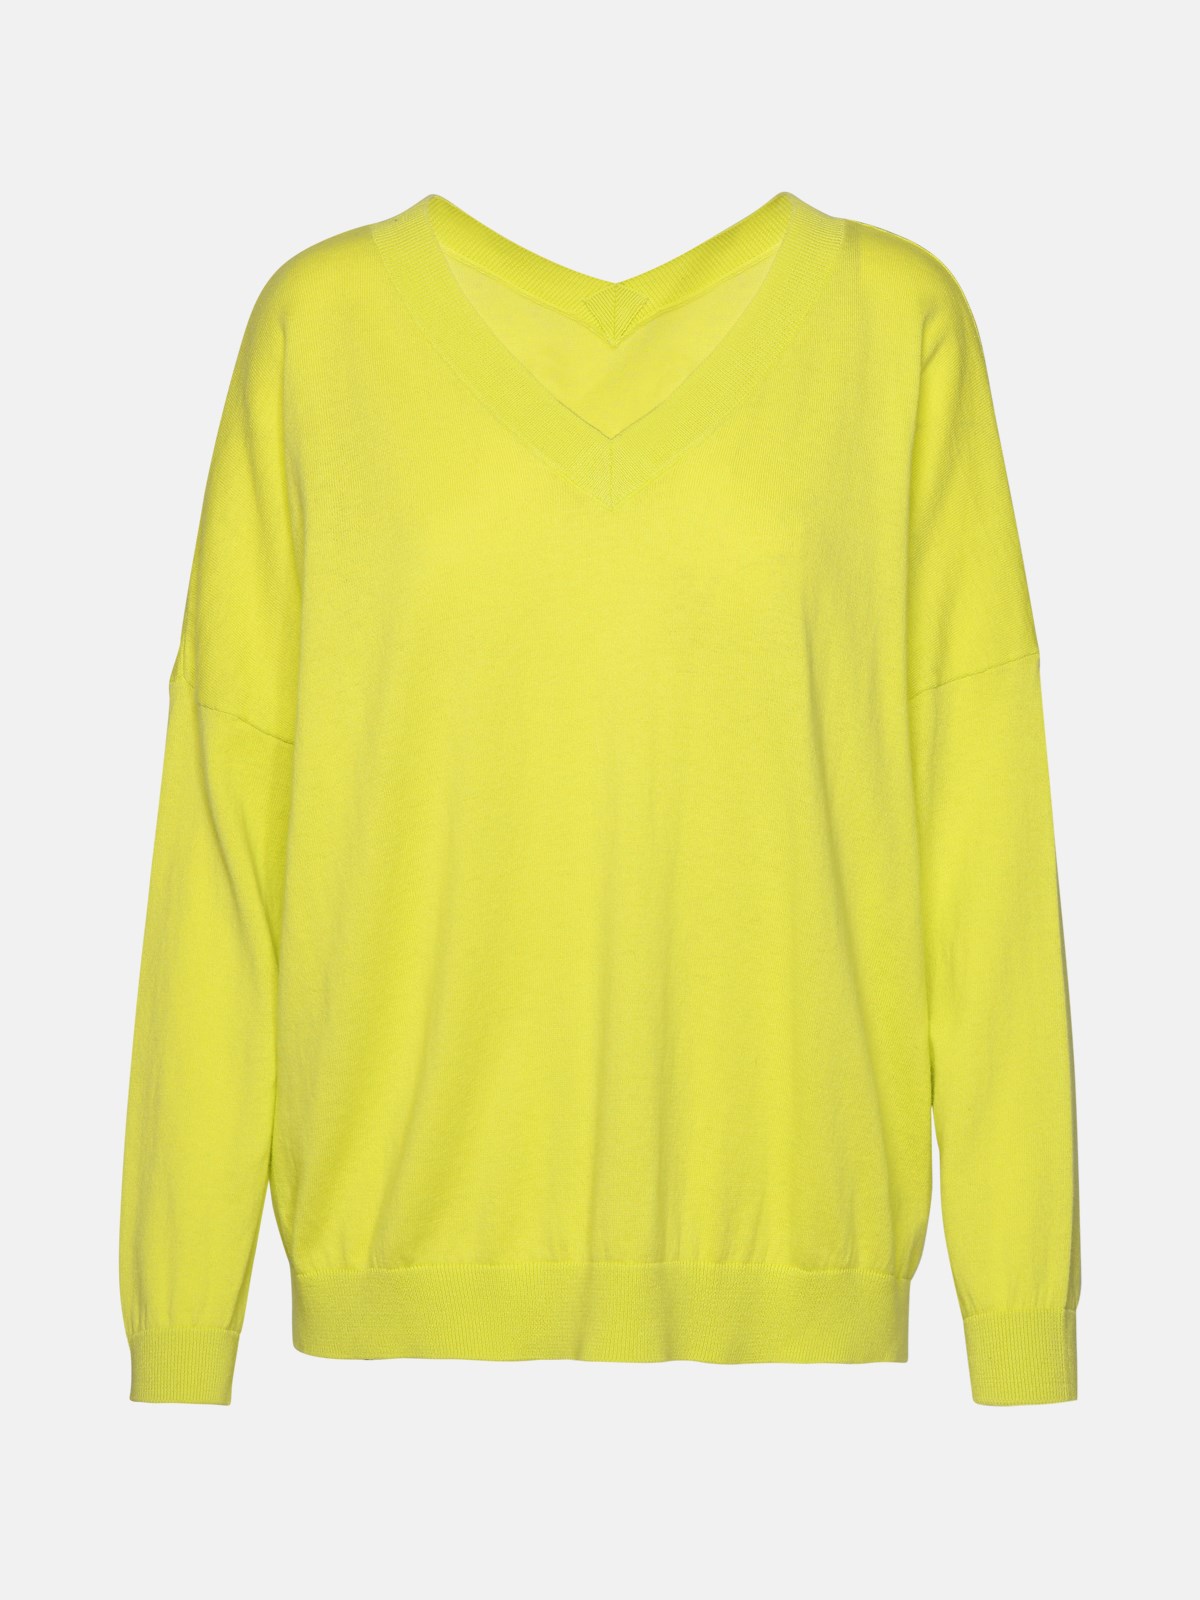 Shop Crush Yellow Cashmere Blend Sweater